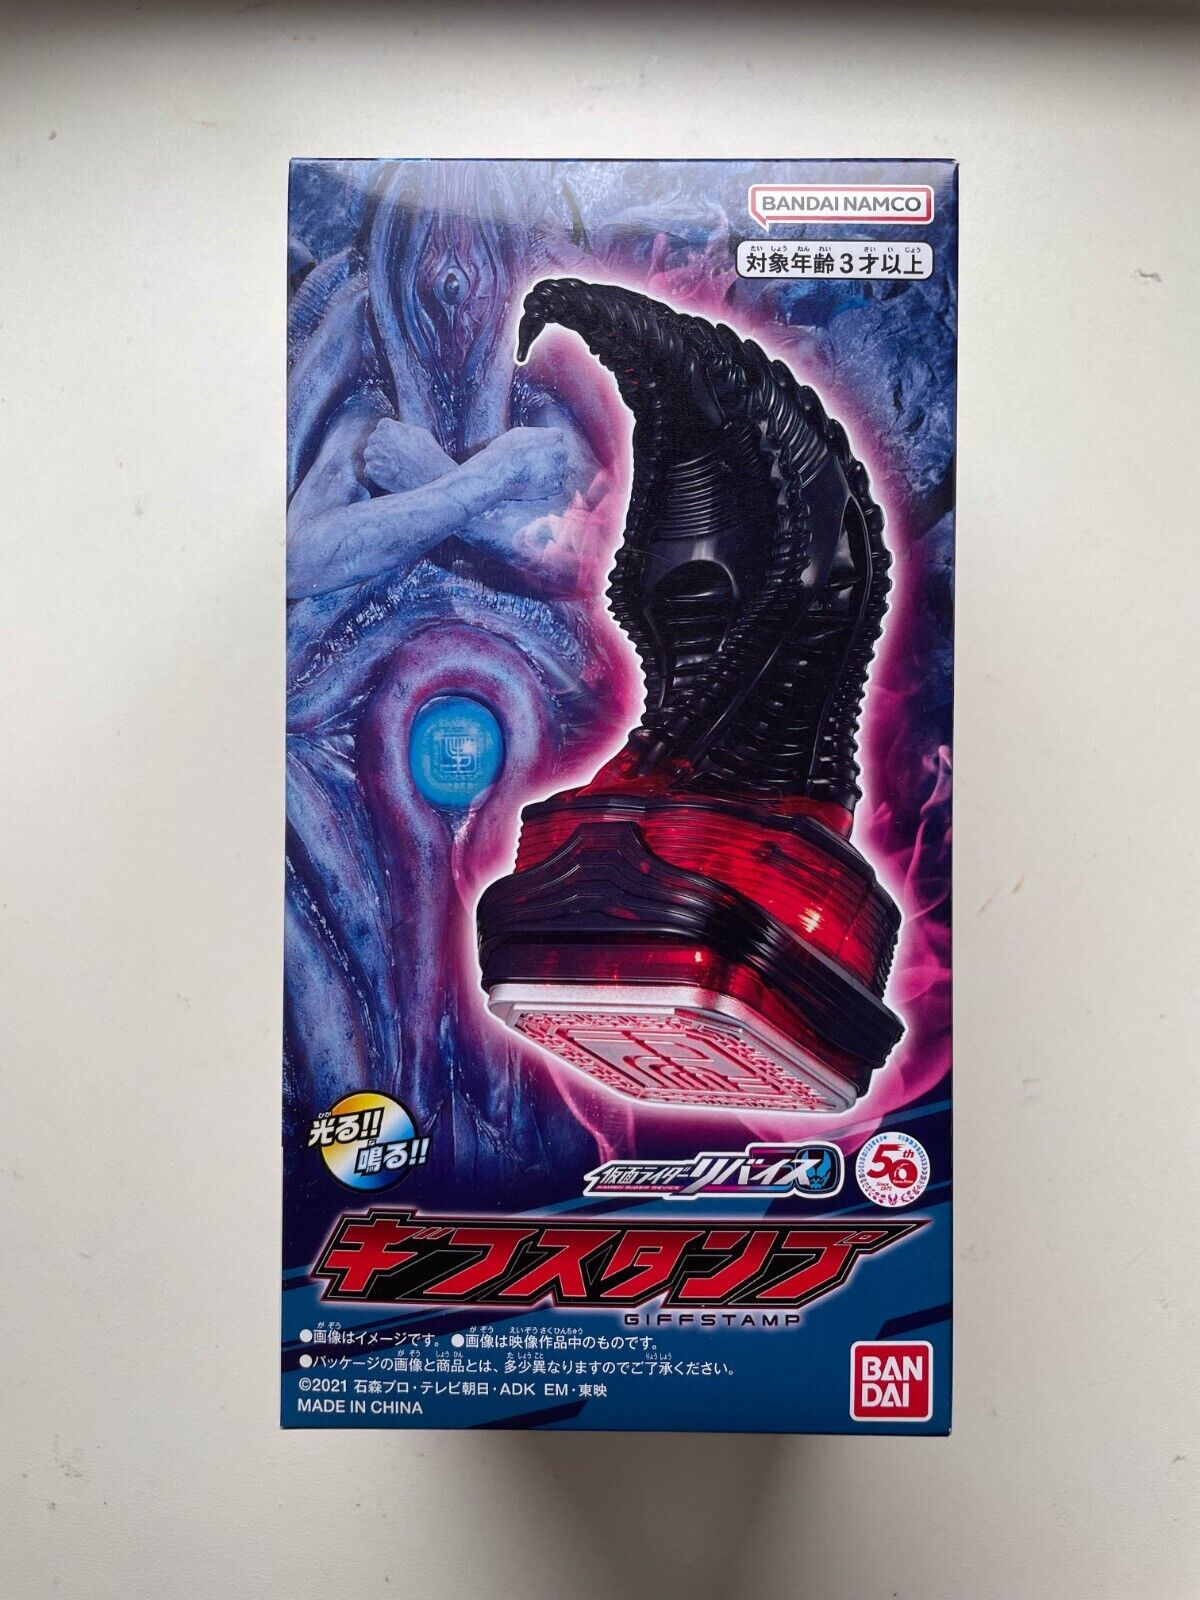 Bandai Namco Kamen Rider Revice DX Giff Stamp From Japan New